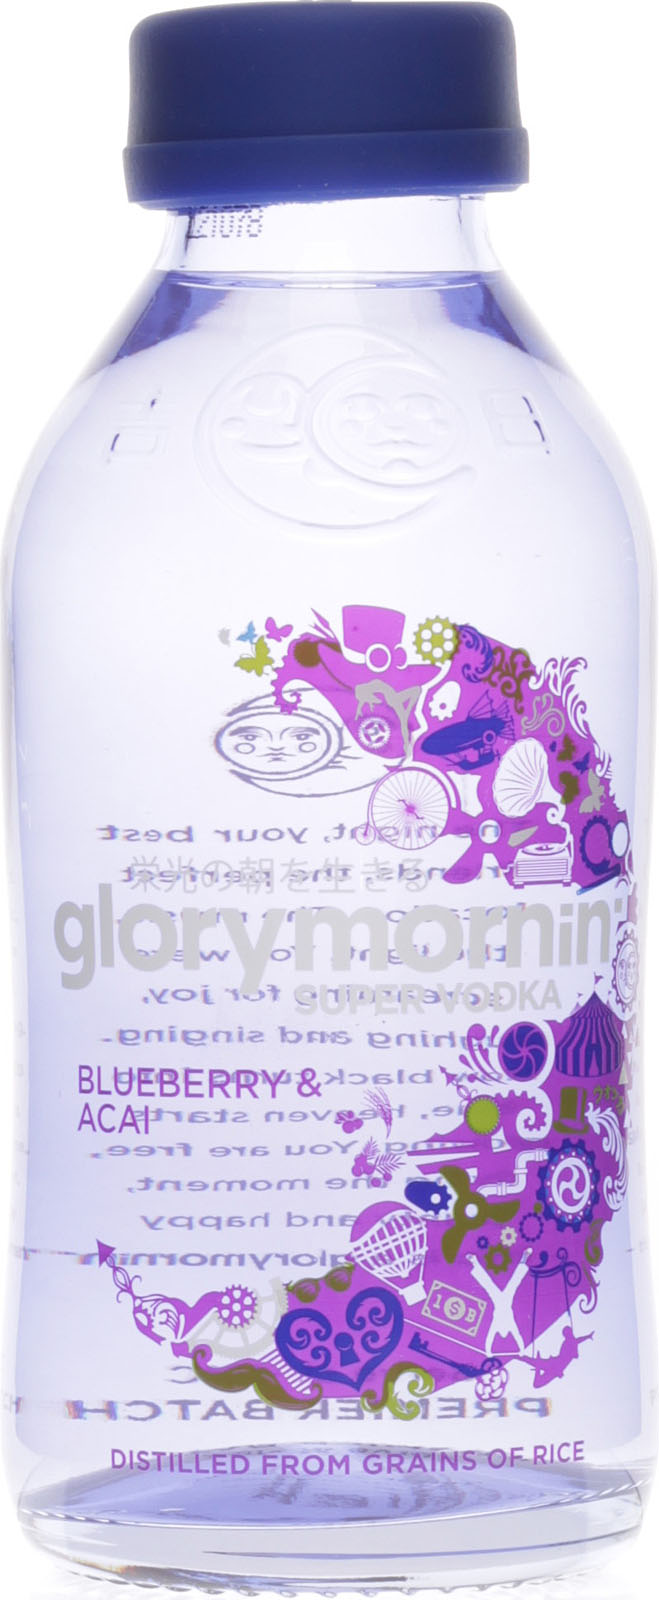 Shop Super Blueberry & Glory - im Vodka Acai Mornin